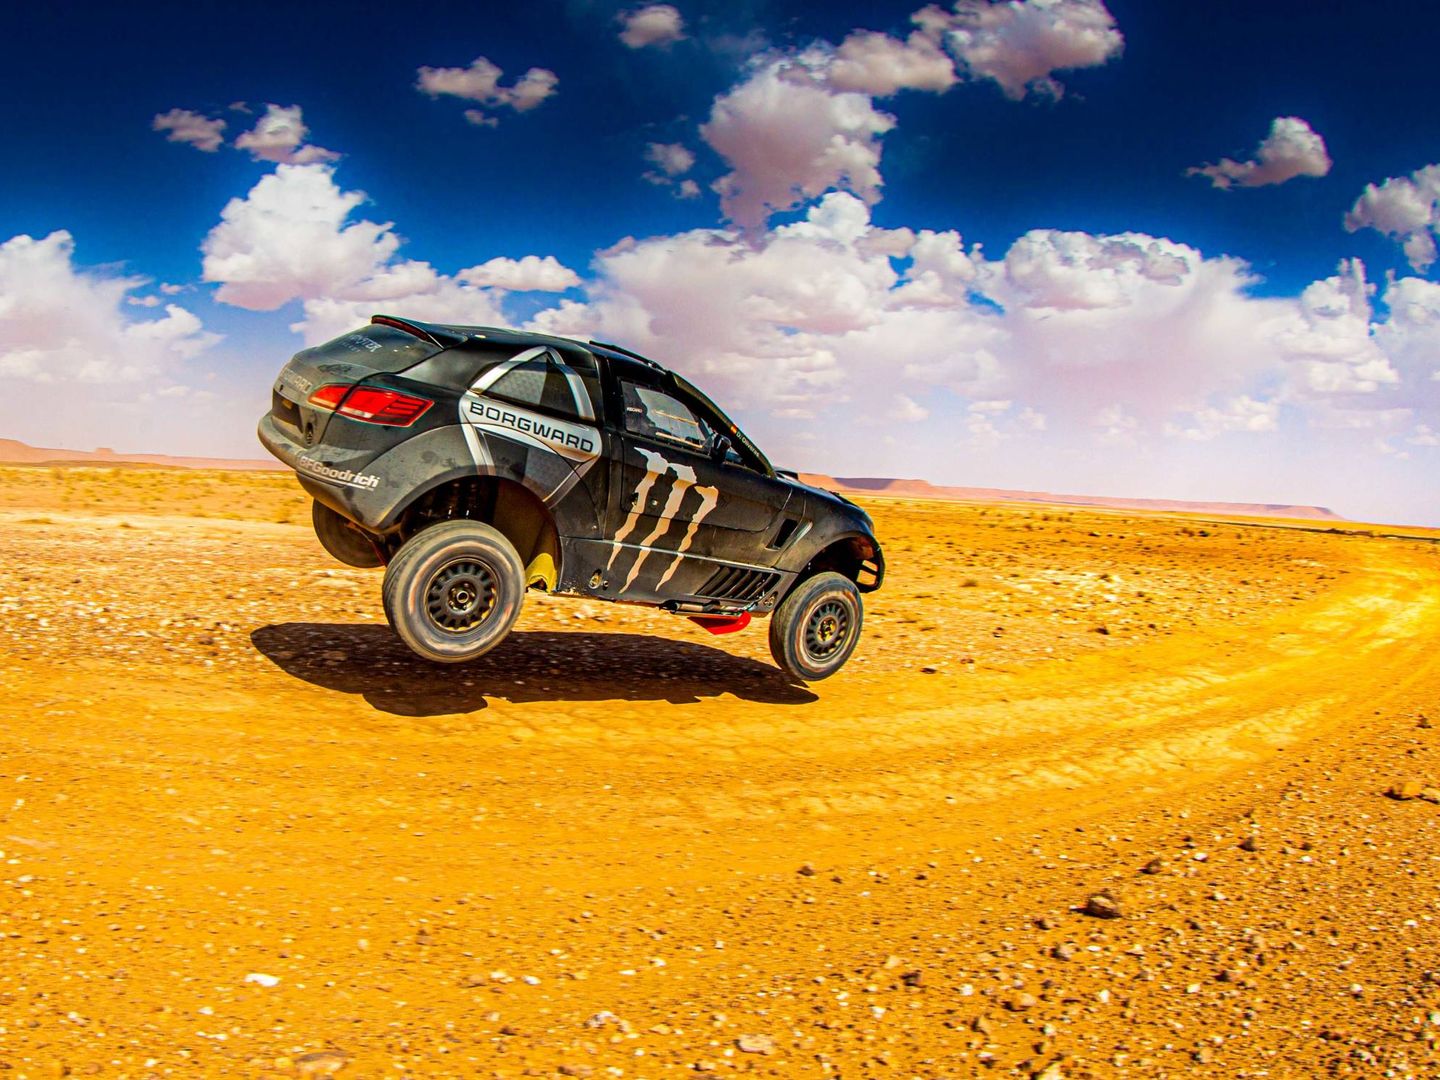 El Dakar estrena recorrido este año por Arabia Saudí. (Foto: Borgward)